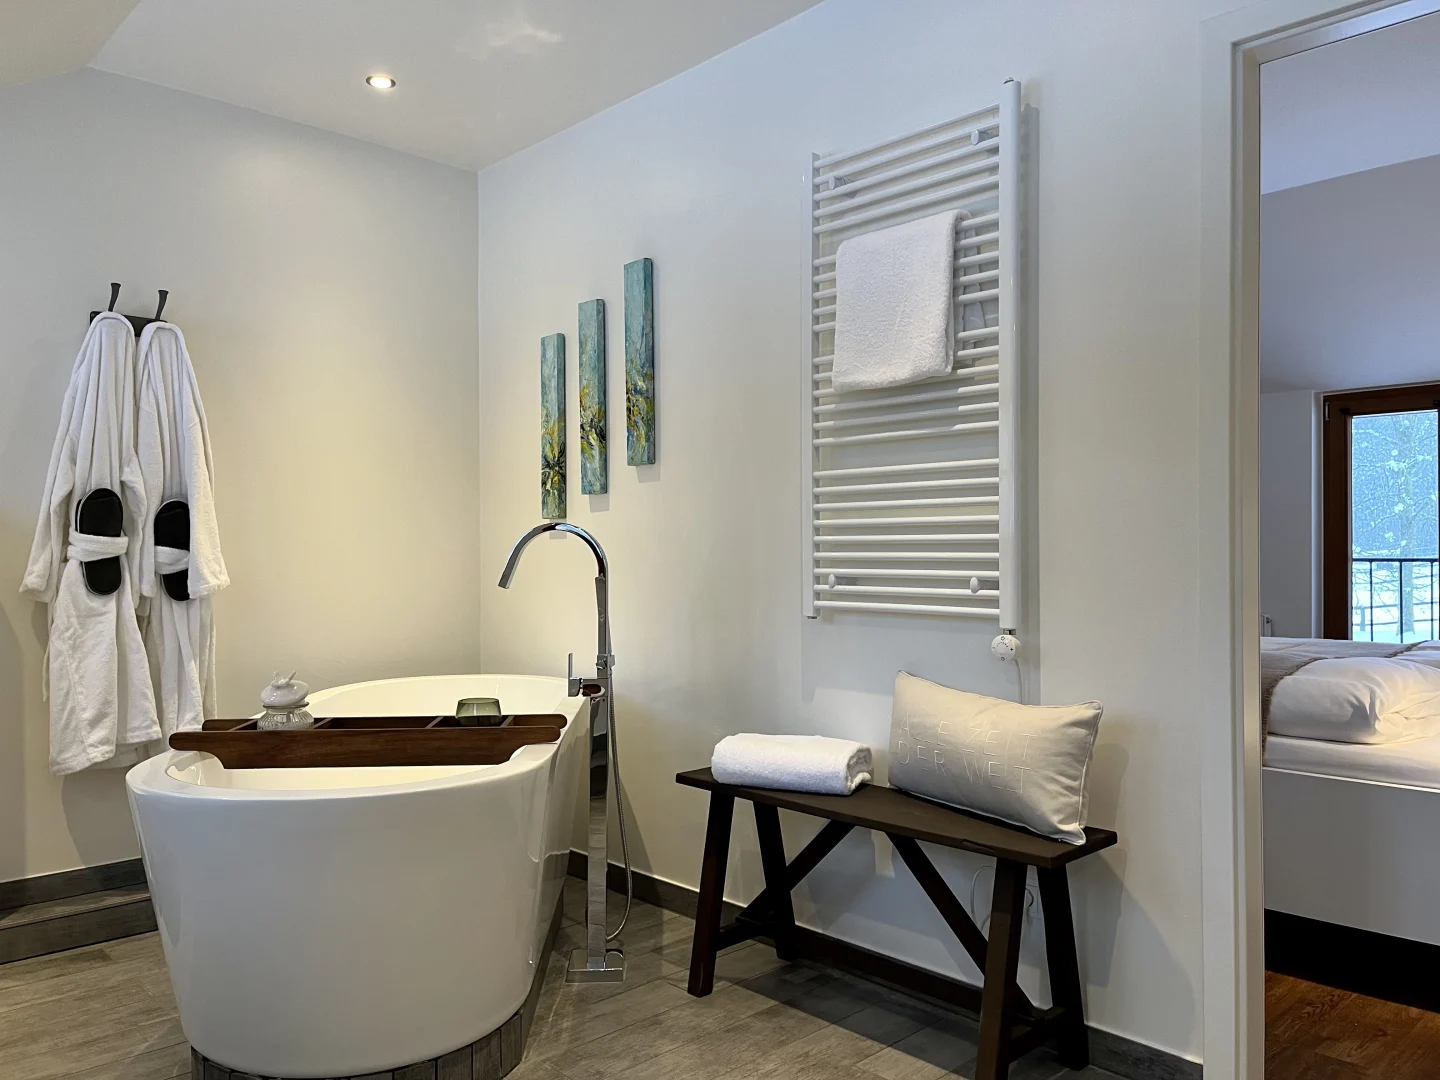 Bild Landhaus-Suite Badezimmer